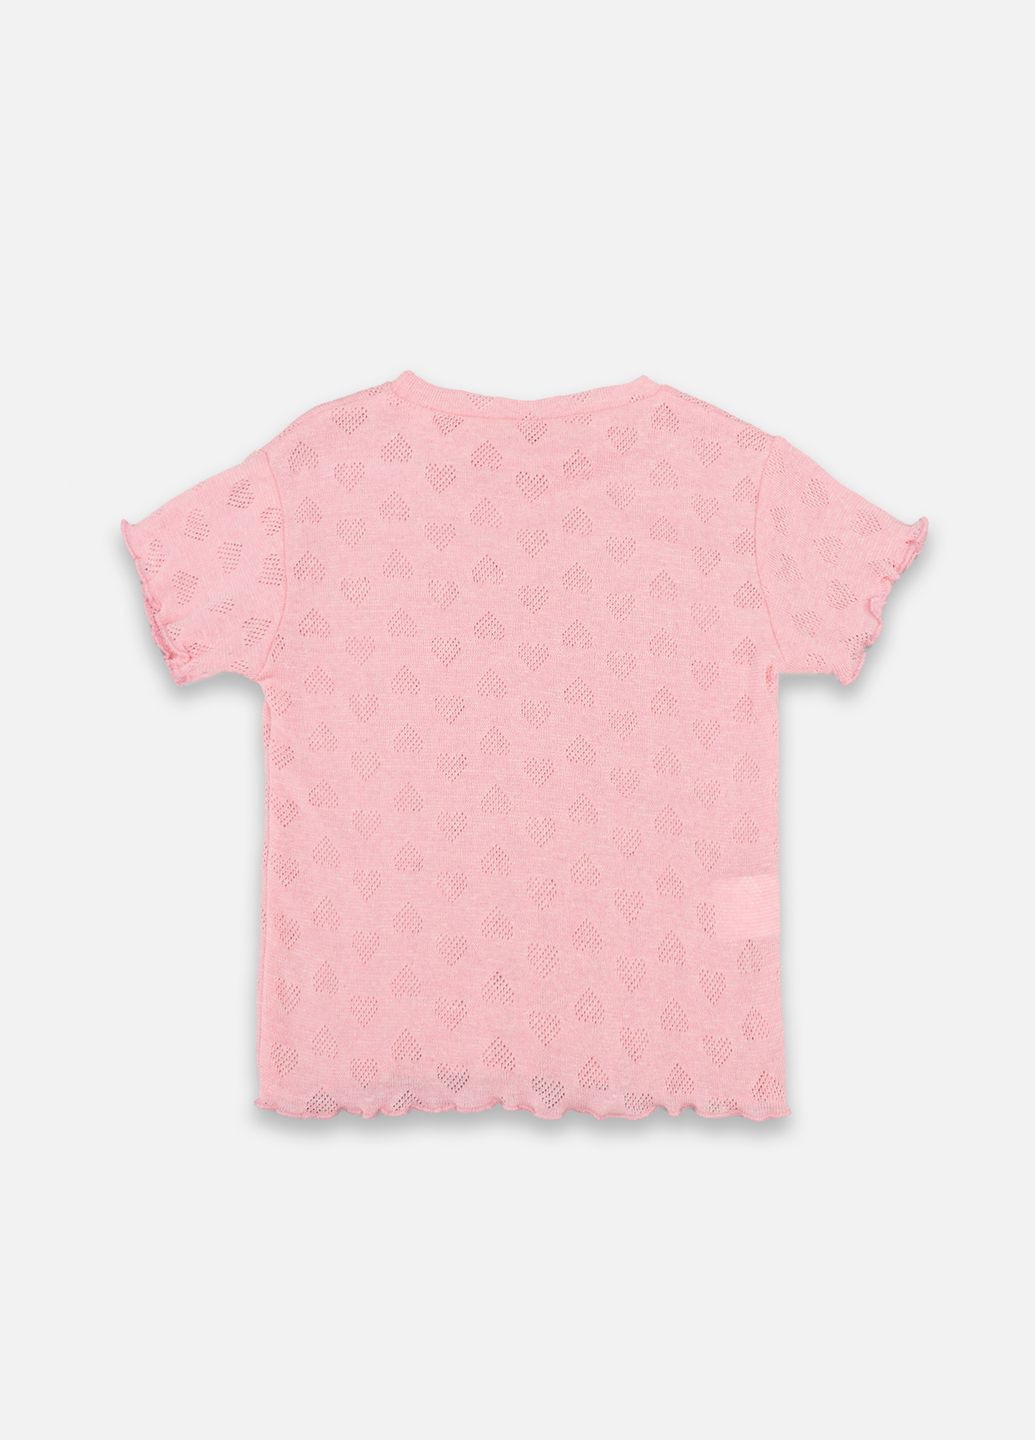 Розовая пижама для девочки цвет розовый цб-00249127 No Brand